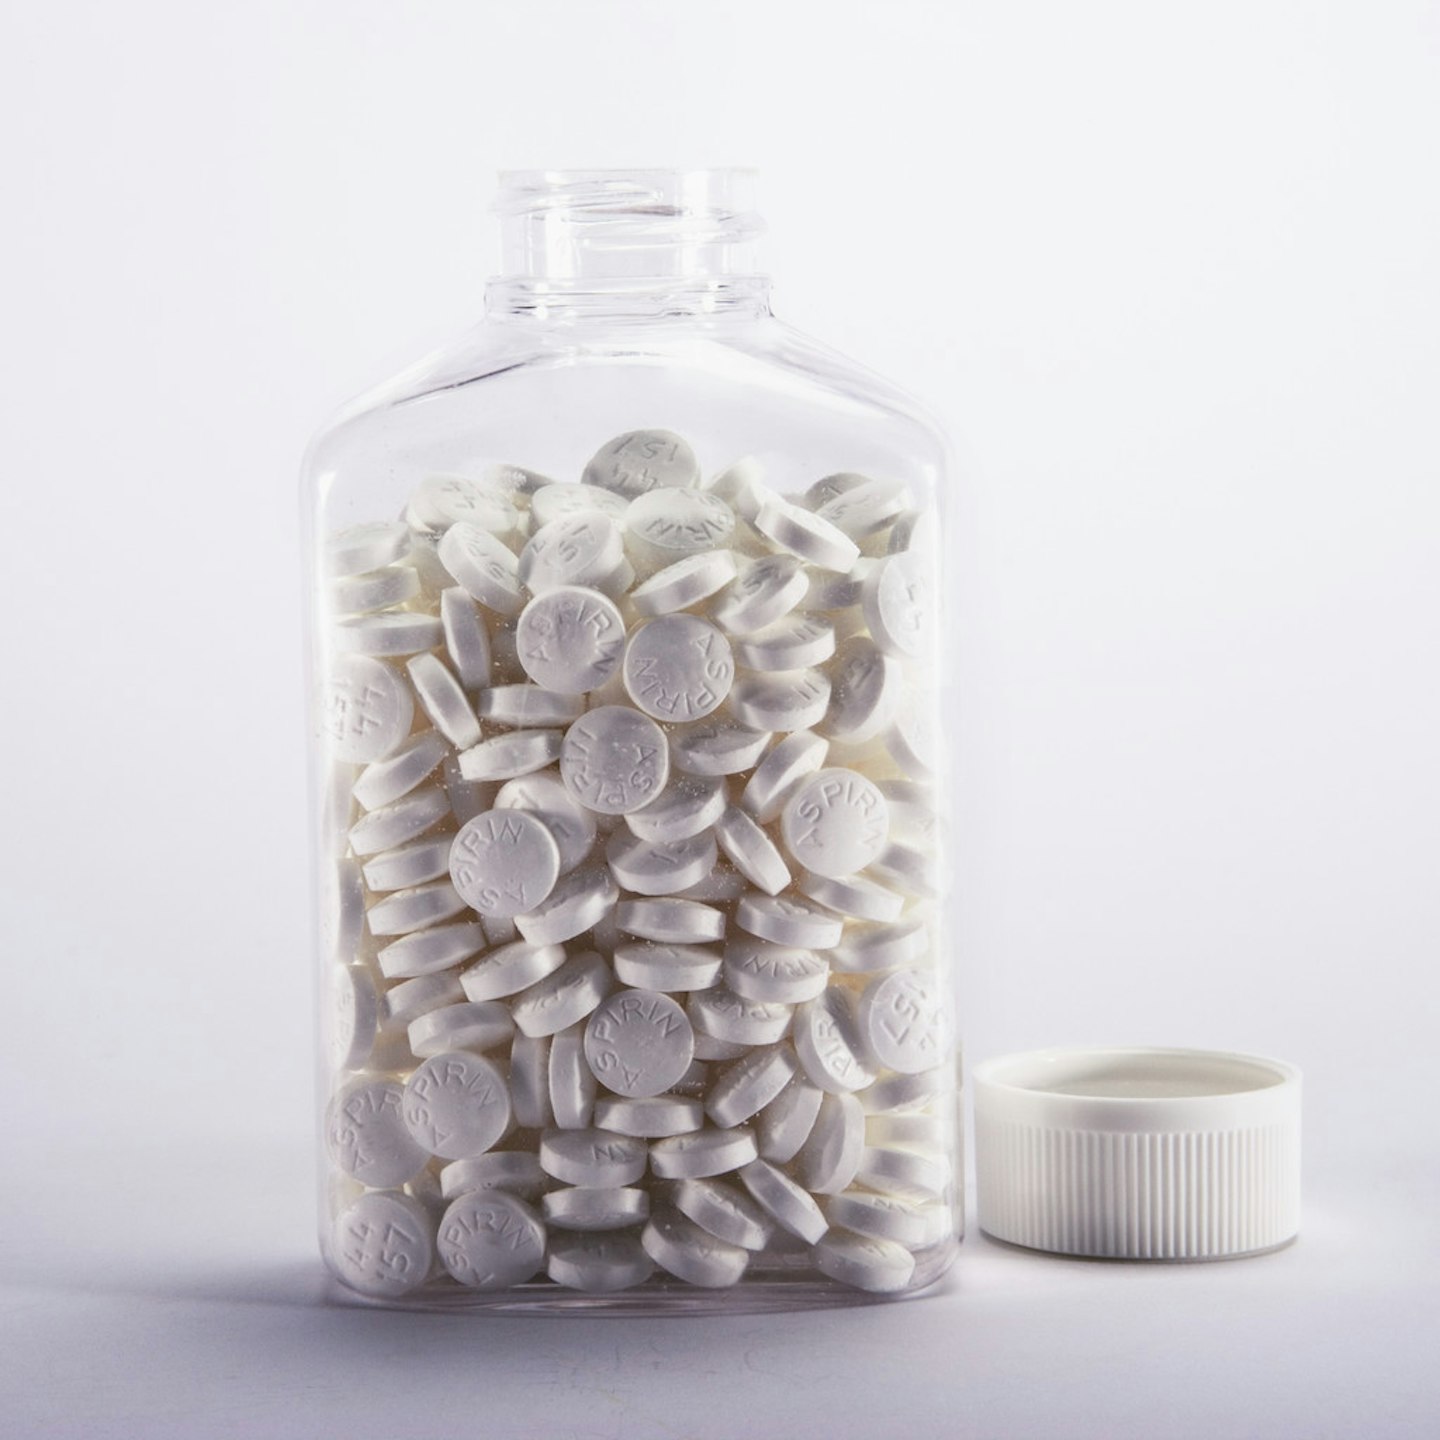 How Taking Aspirin Could Boost Fertility